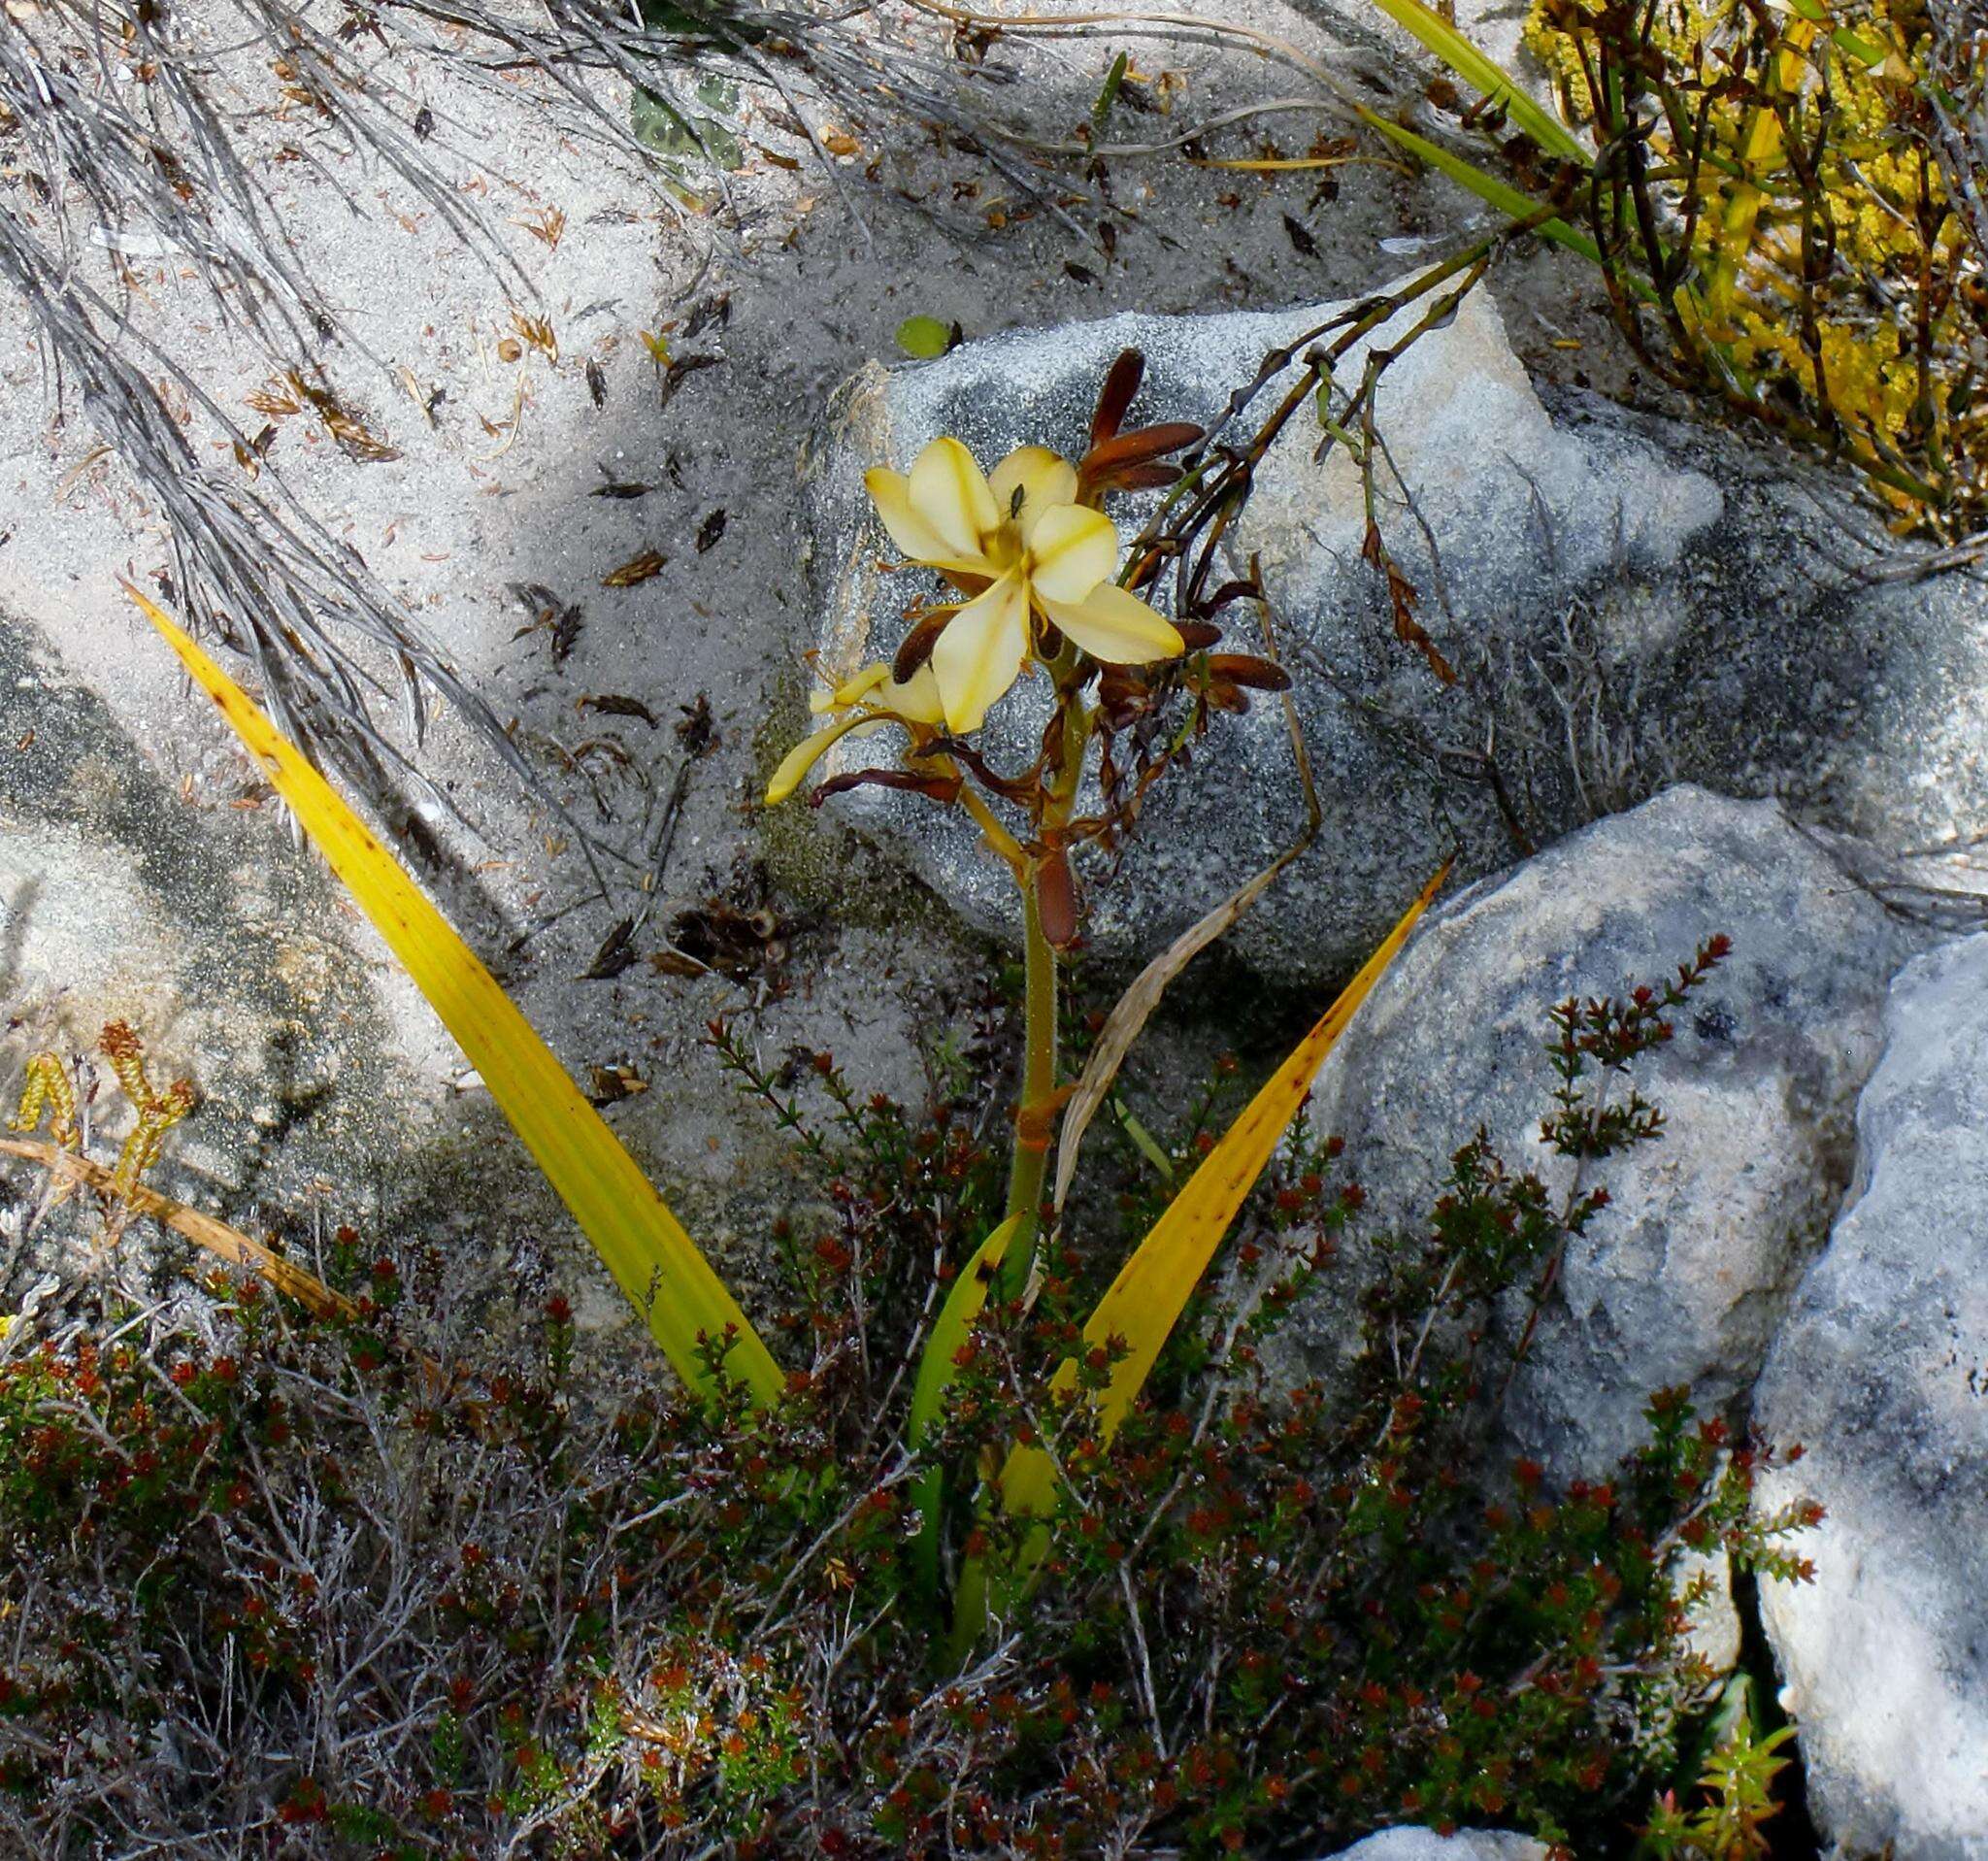 Image of Wachendorfia paniculata Burm.